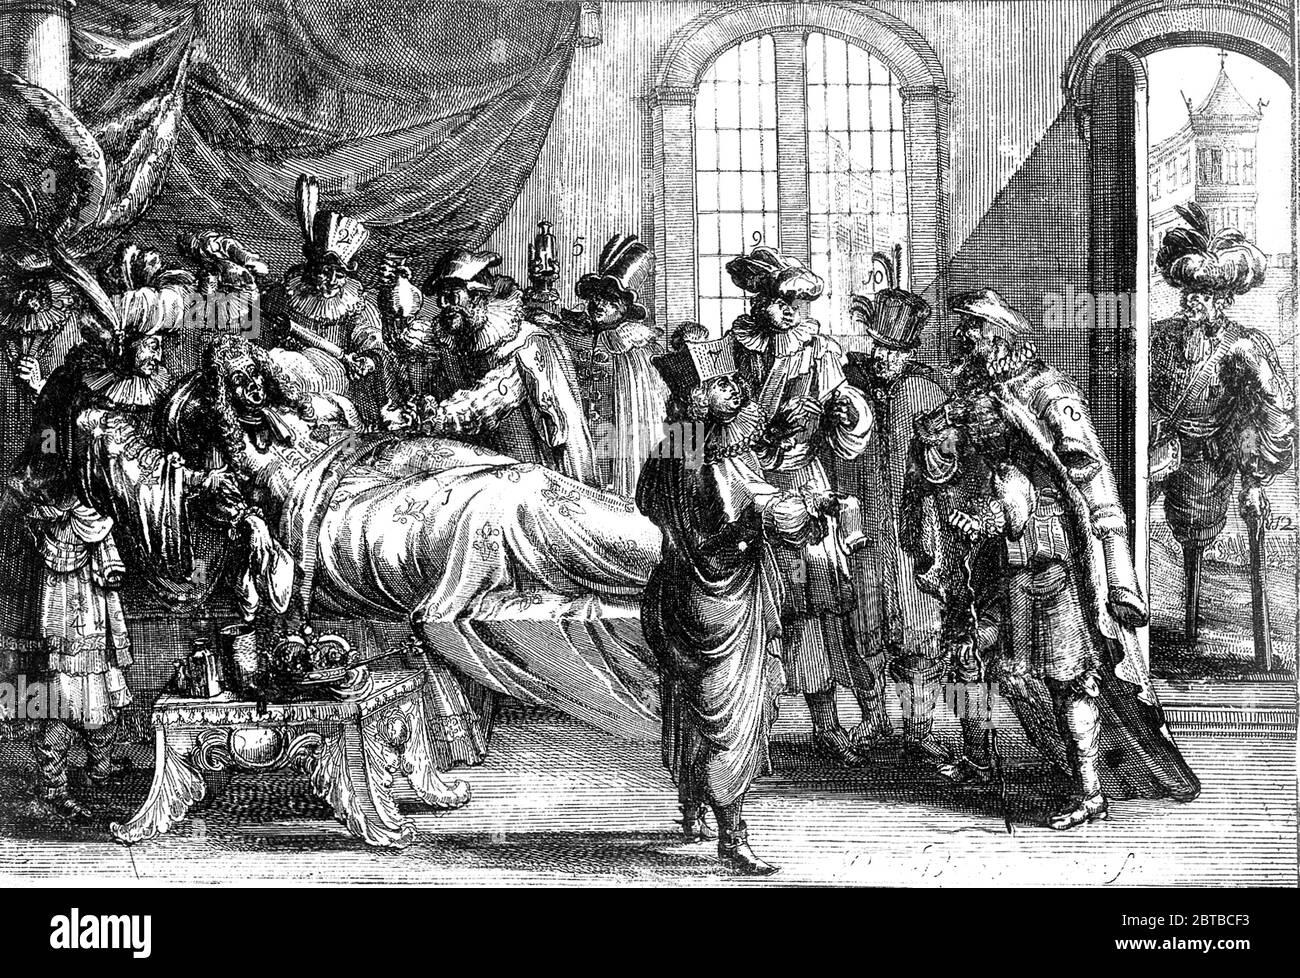 1700 ca , PARIS , FRANCE : The King LOUIS XIV of FRANCE LE ROI SOLEIL ( 1638 – 1715 ) of Bourbon . Satyrical portrait engraved by Romain De Hooghe , with Louis XIV being attended by physicians for enema . - IL RE SOLE - NOBILITY - NOBILI - Nobiltà francese  - REALI  - ROYALTY -  CASA REGNANTE DI FRANCIA  - illustrazione - illustration - engraving - incisione - RE -  Luigi XIV -  satira - caricatura - caricature - clistere - enteroclisma - MEDICO - MEDICINA - MEDICI - Dottore - letto - bed - malato - malattia - sik --- ARCHIVIO GBB Stock Photo